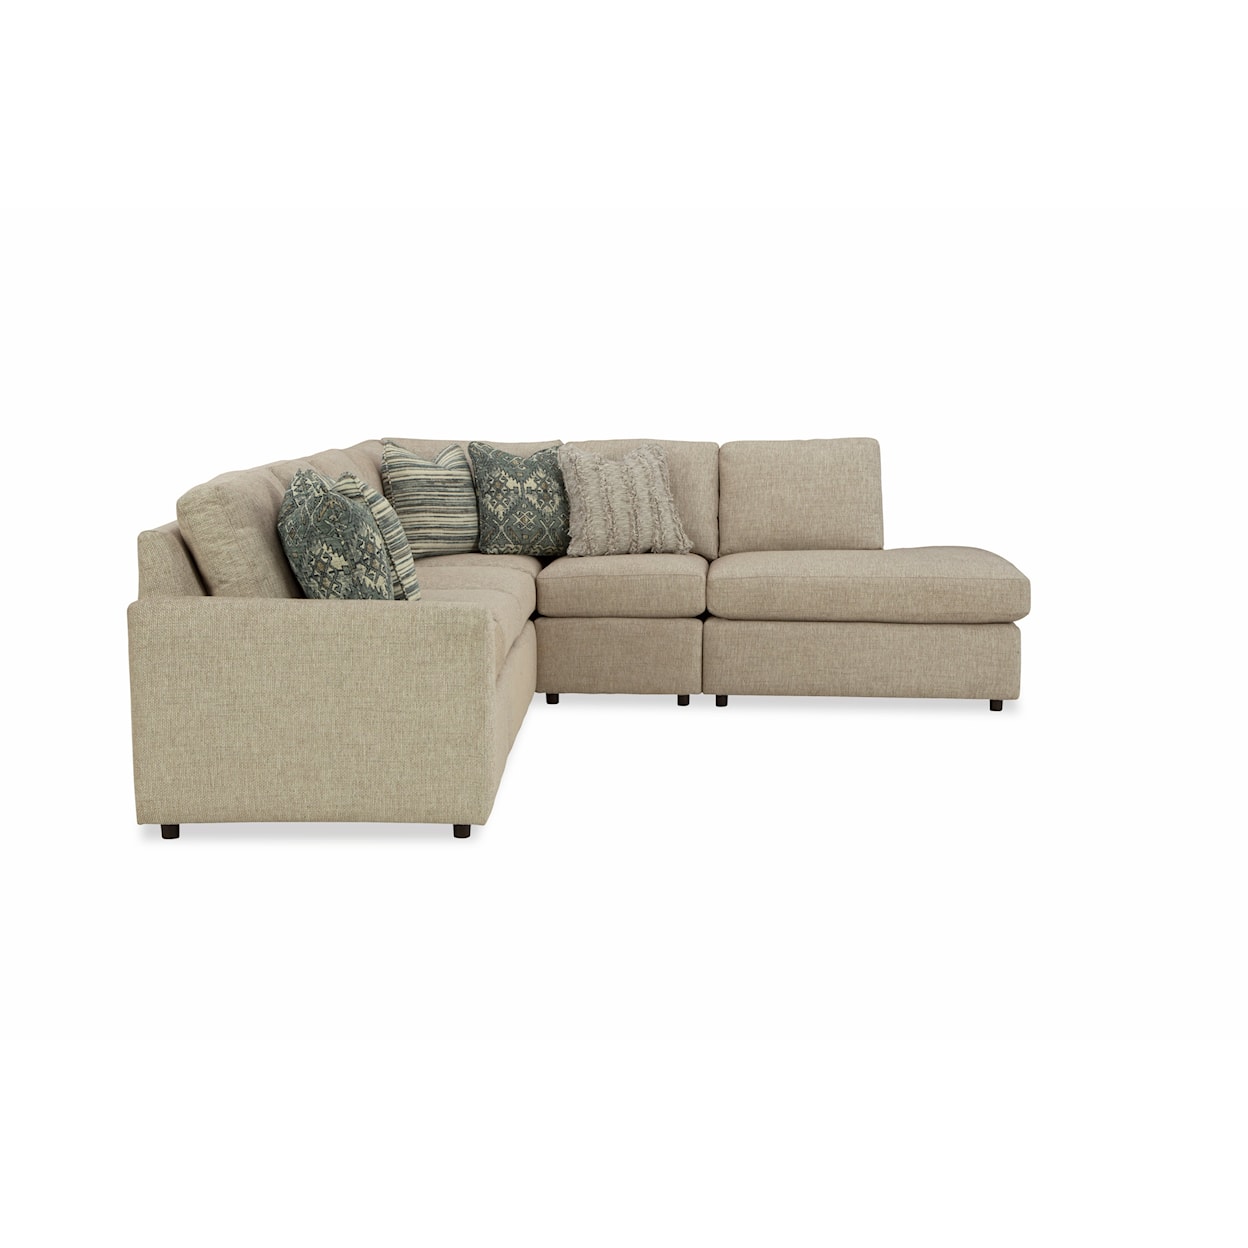 Hickory Craft 738050 4-Piece Sectional Sofa